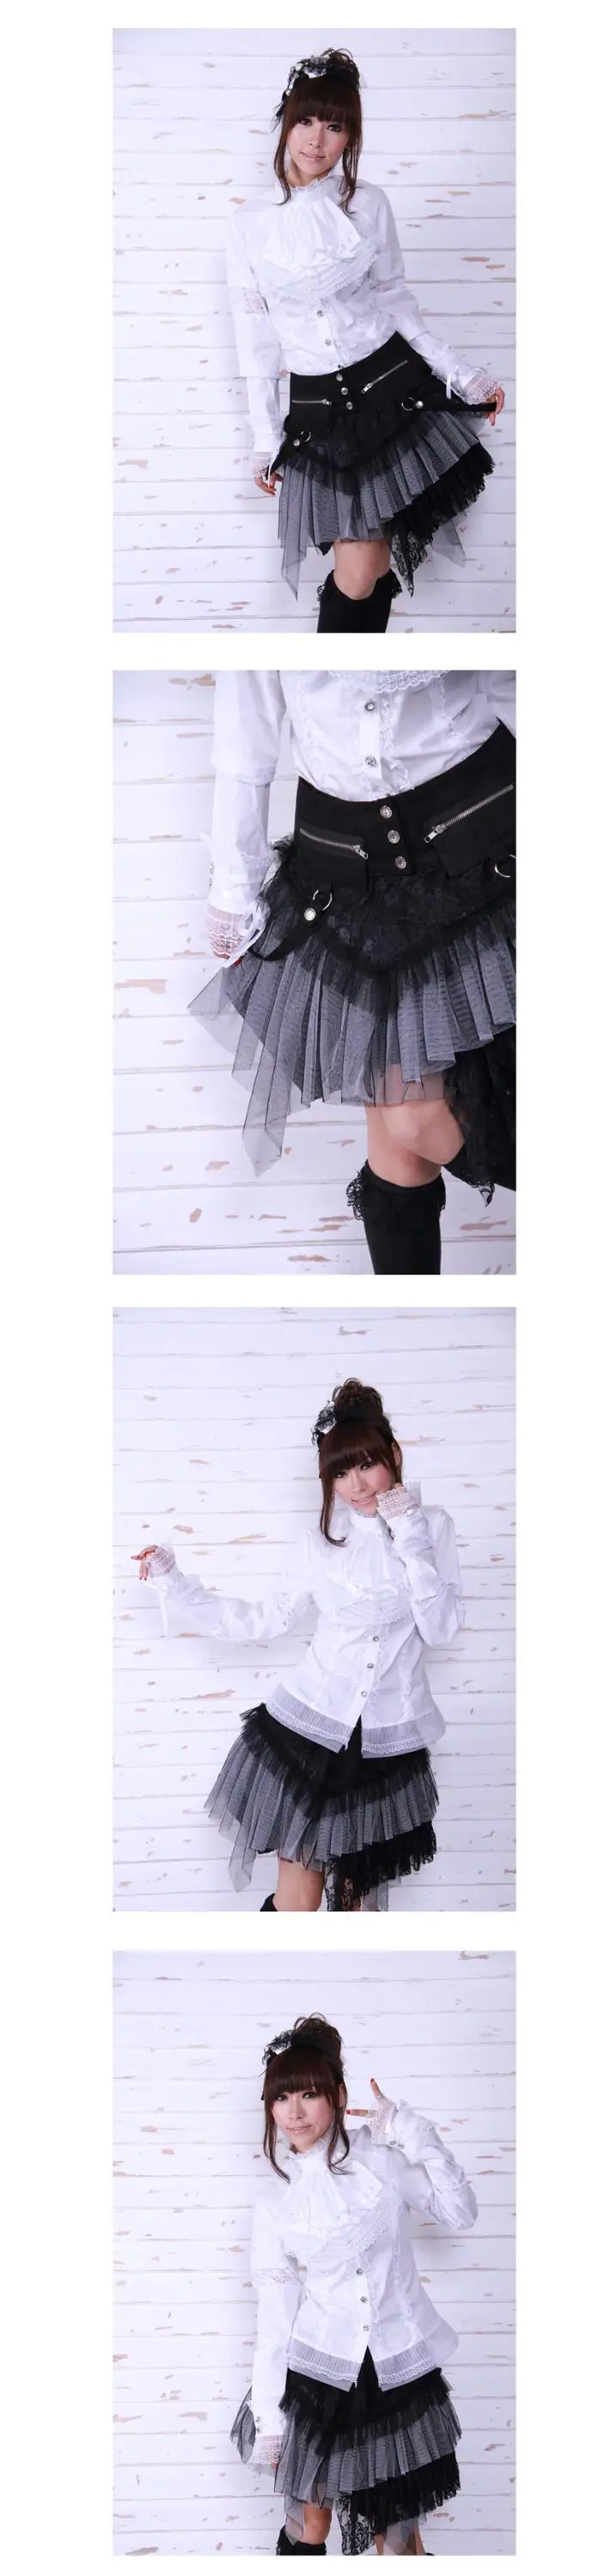 RQBL China Factory Direct Sale Low MOQ Women Lace Gothic Bubble Skirt